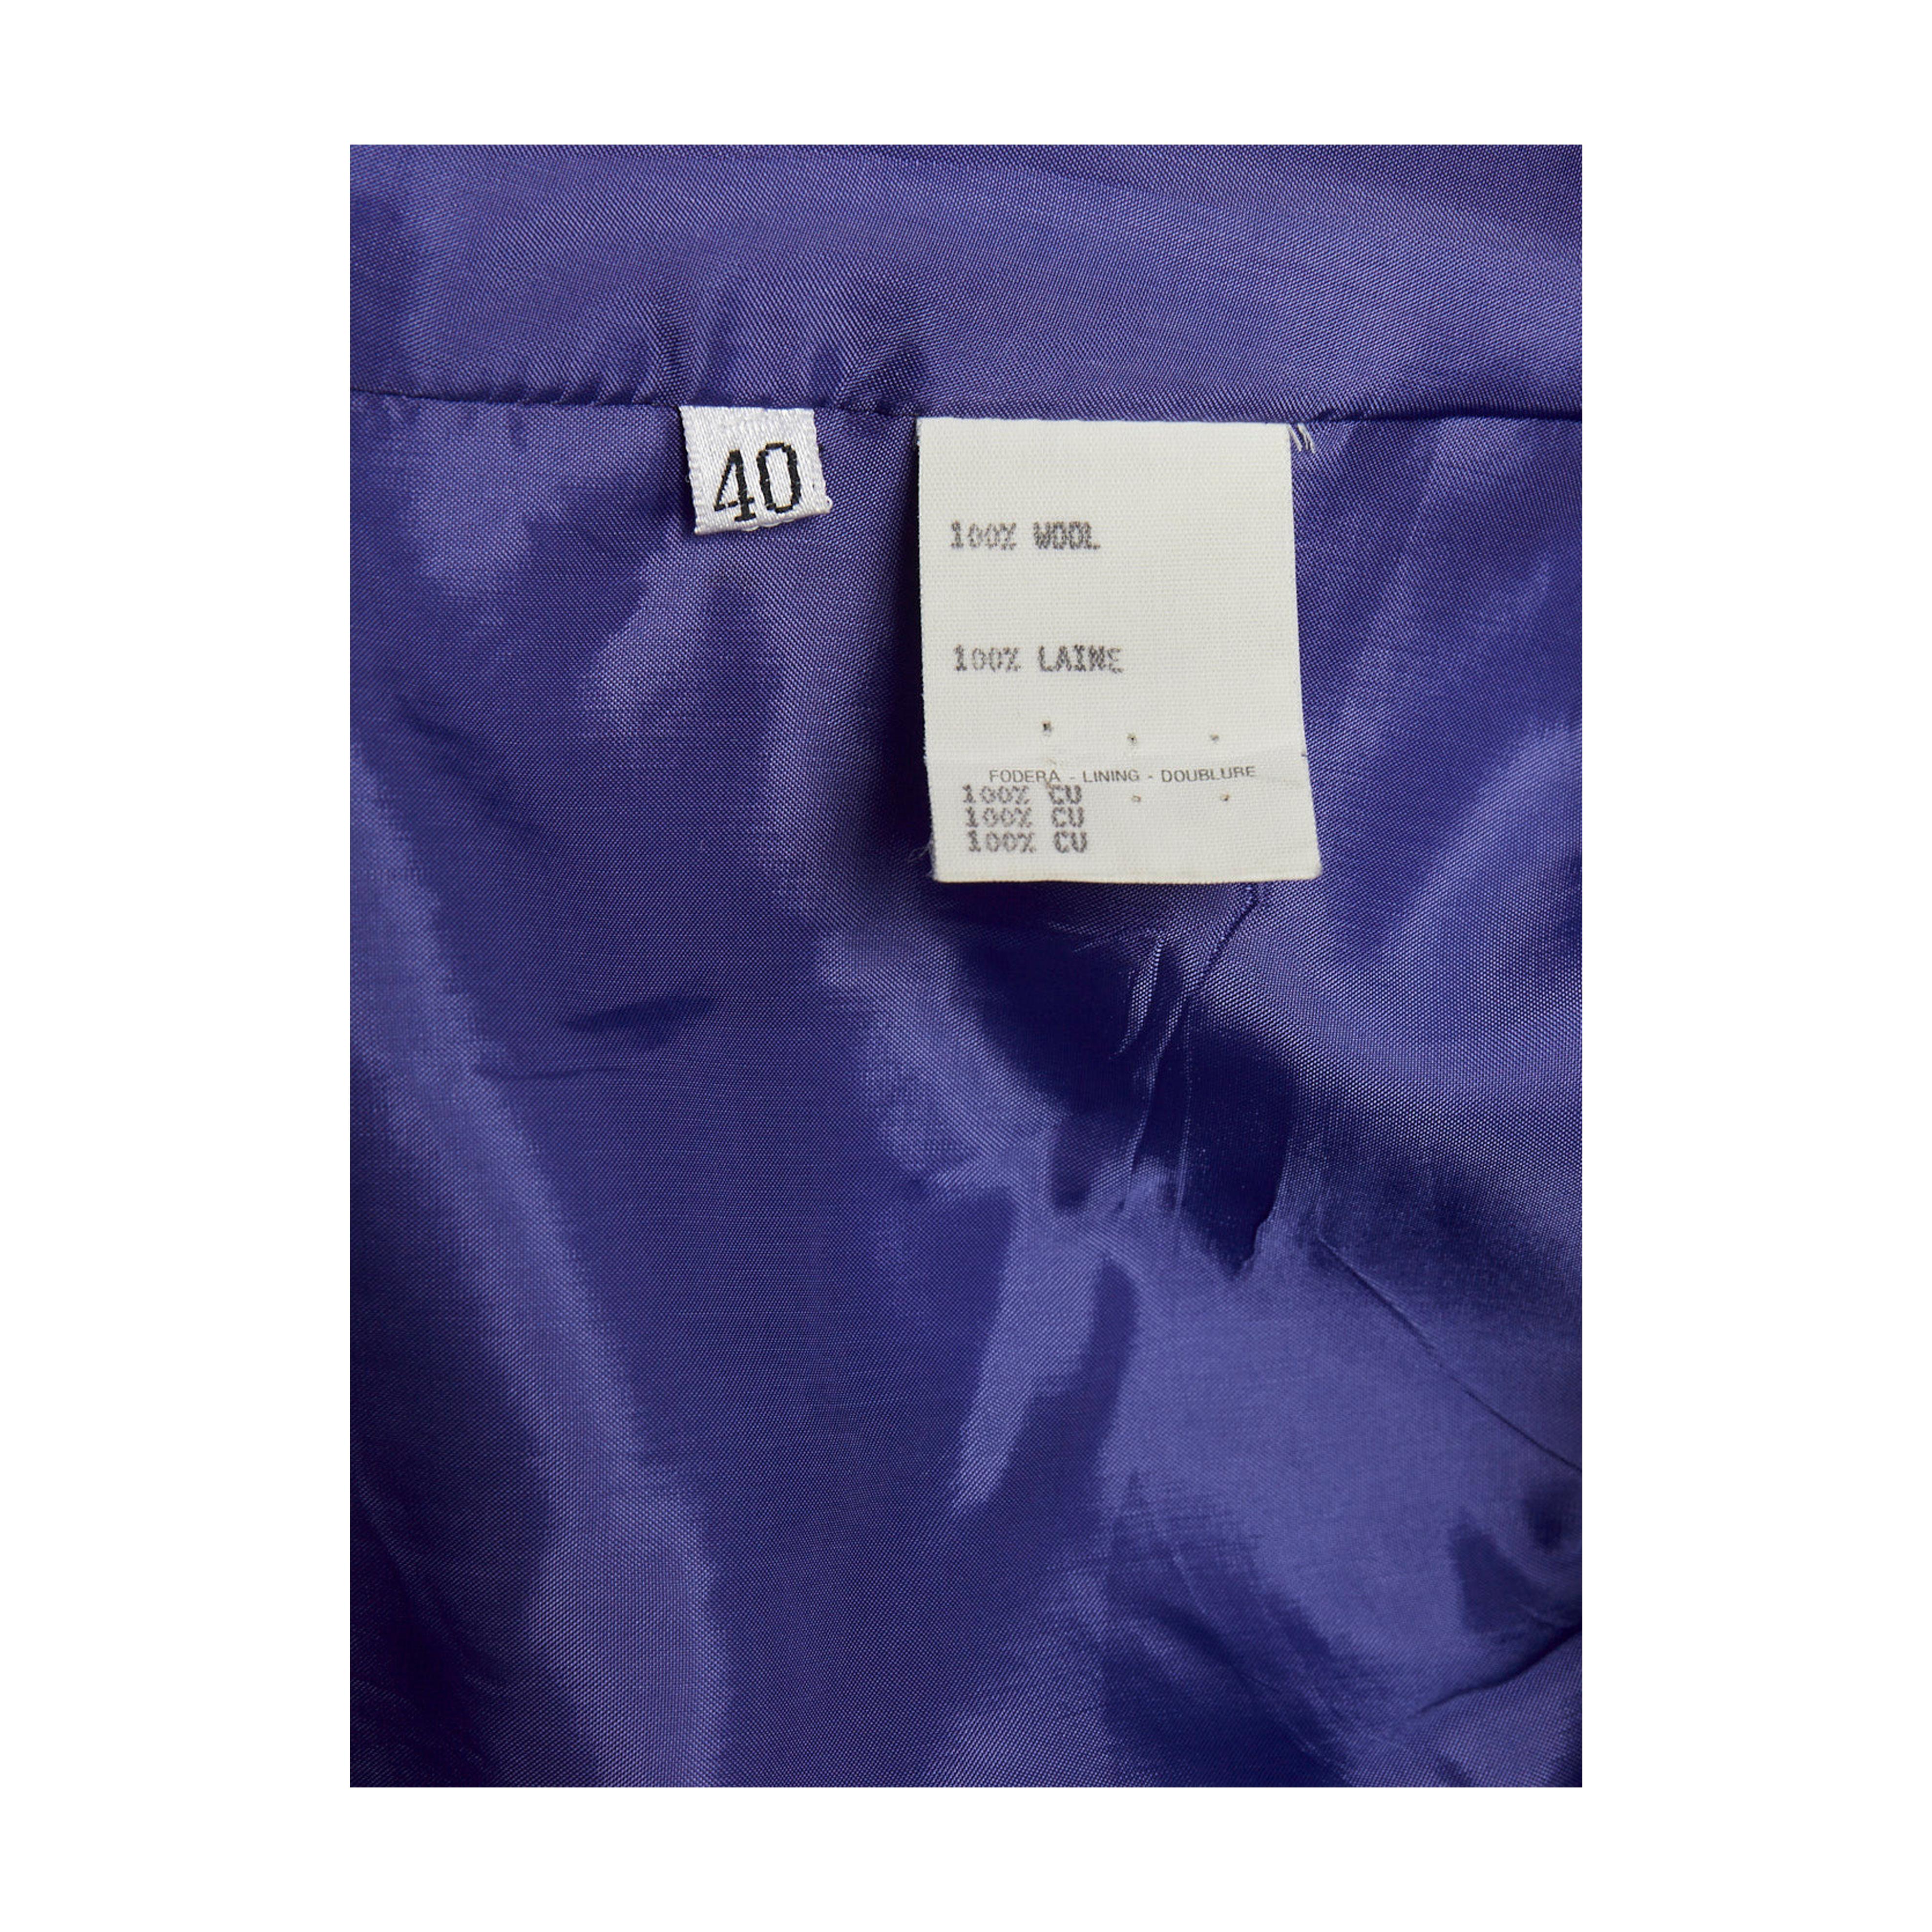 Gianni Versace Purple Suit For Sale 1